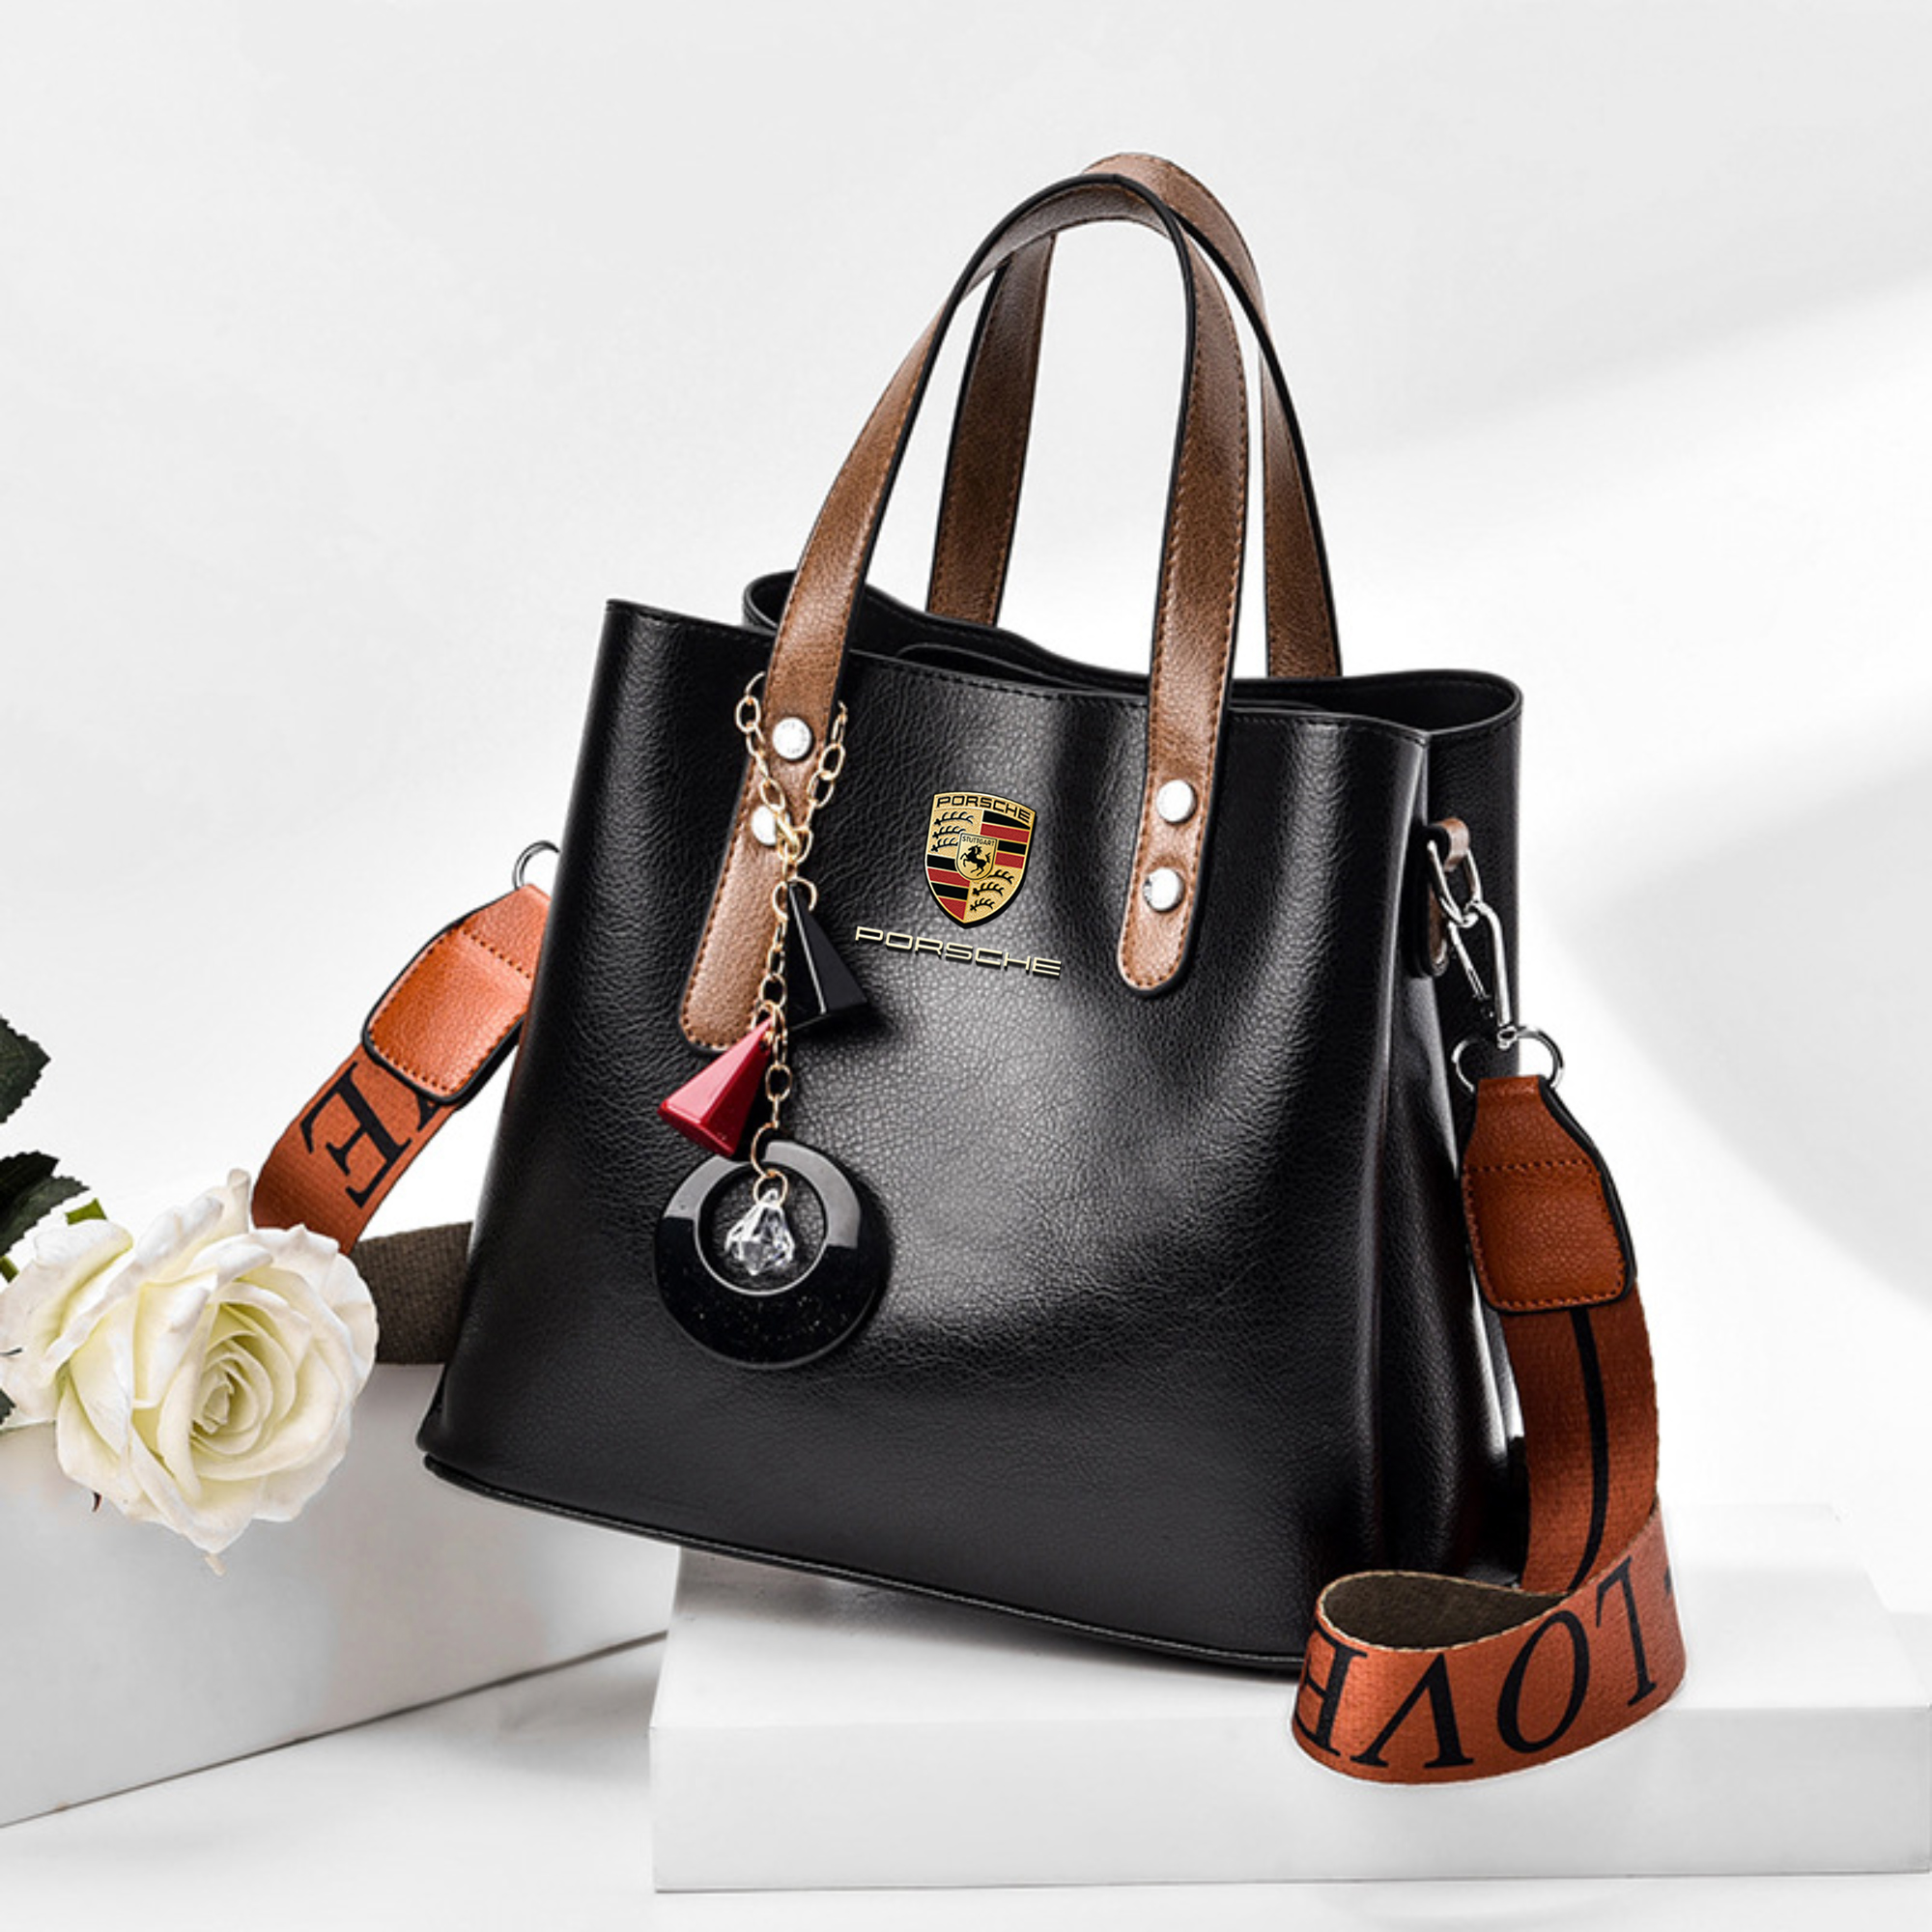 Buy SILVER ROSE Women Girls Beige Handbag at Amazon.in